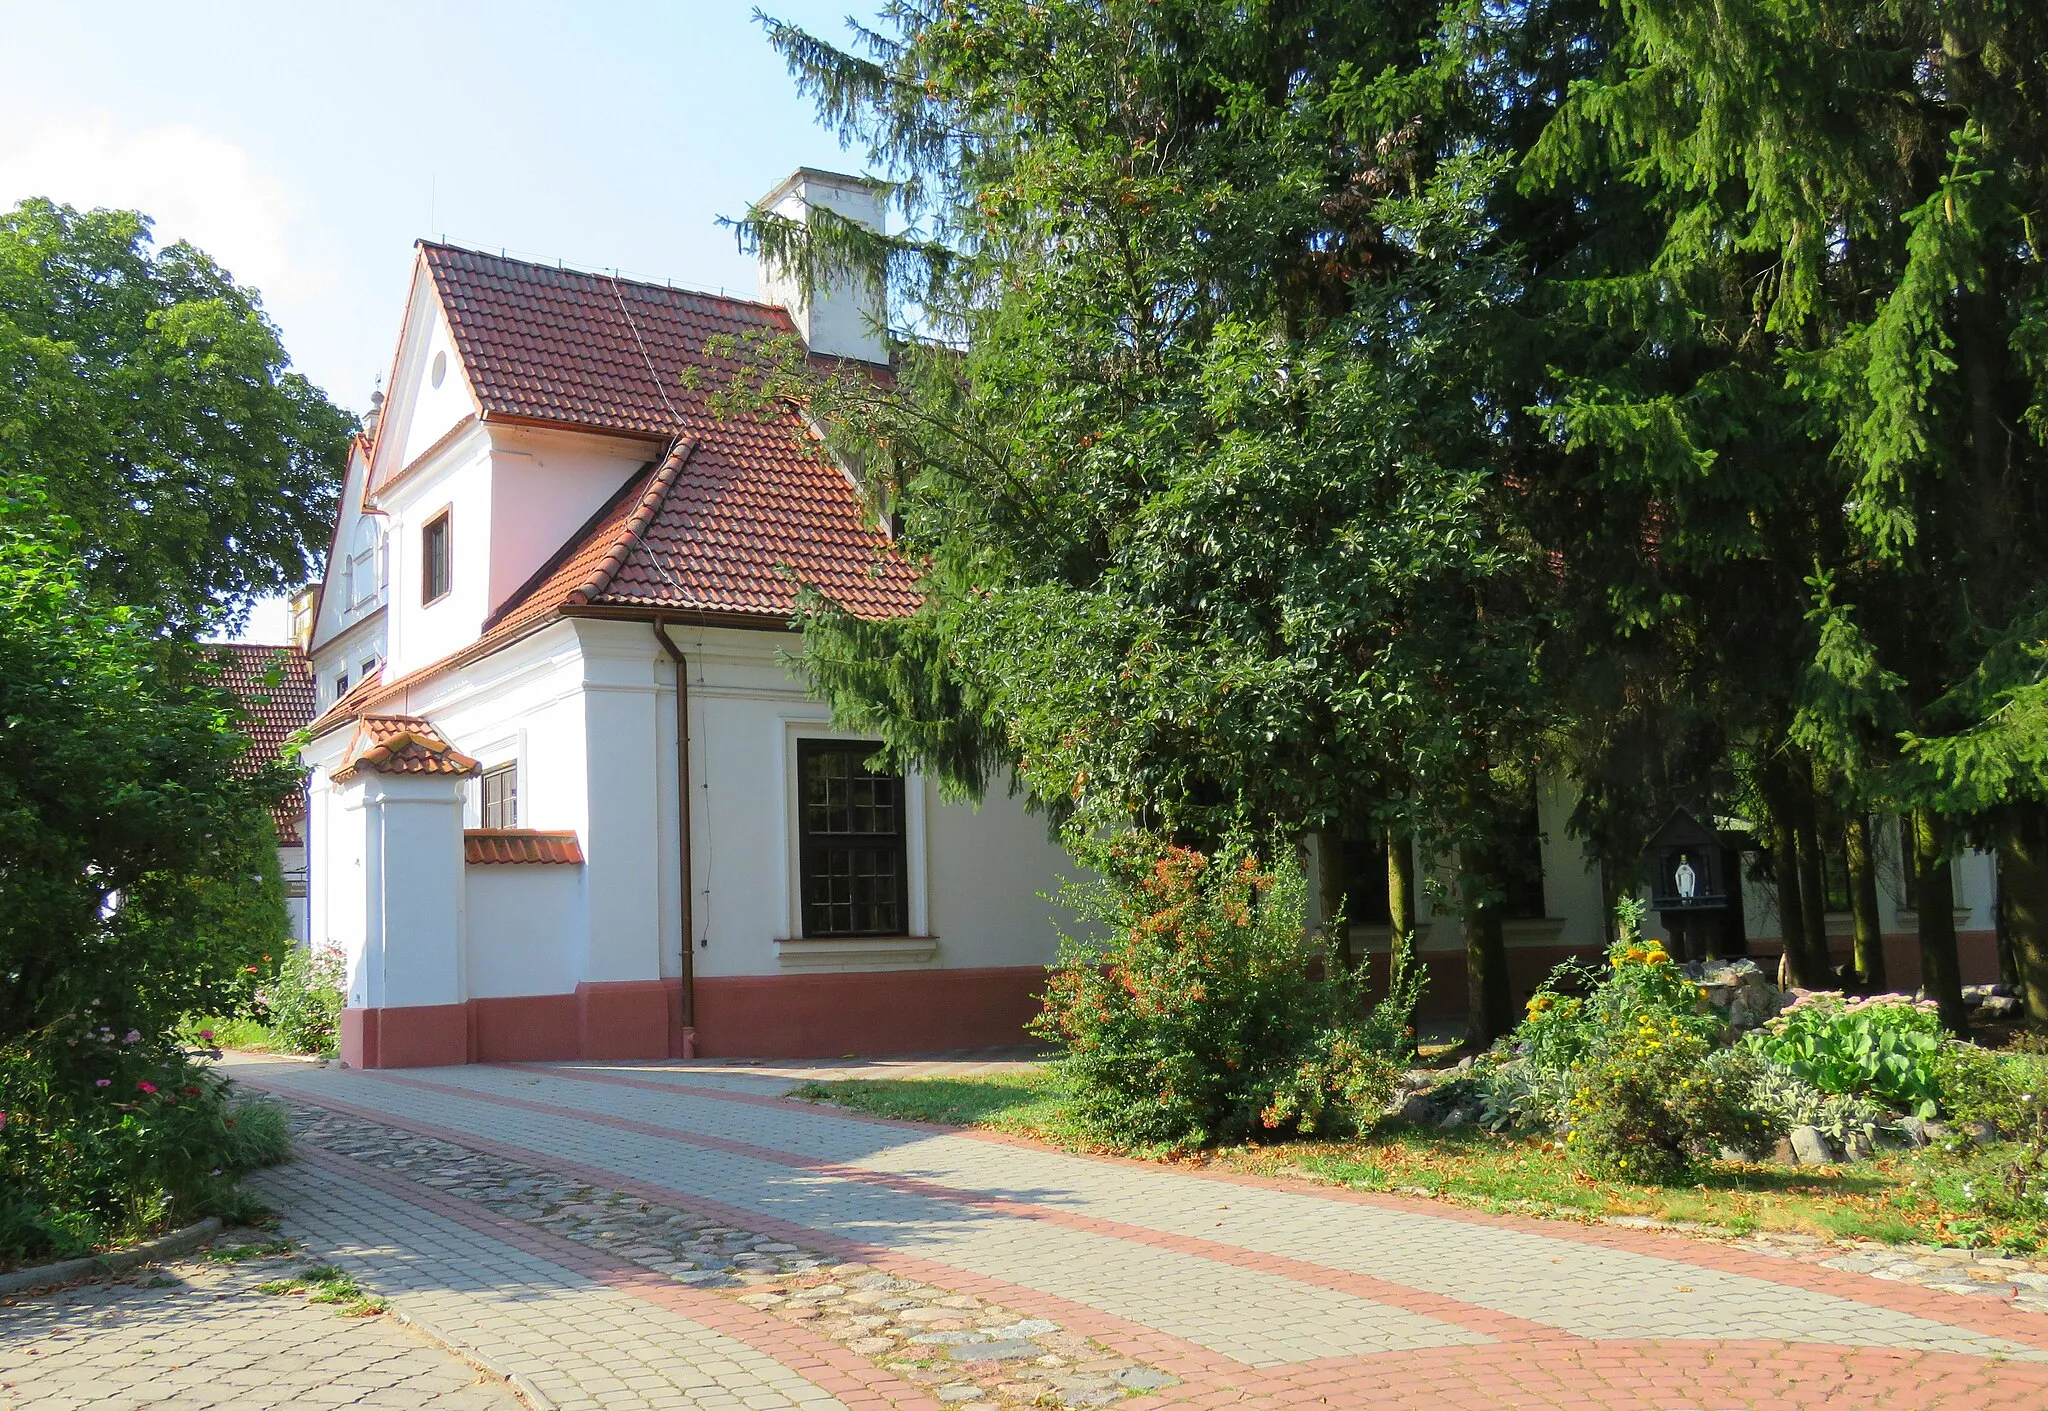 Photo showing: Tyzenhaus Manor in Nowa Wieś